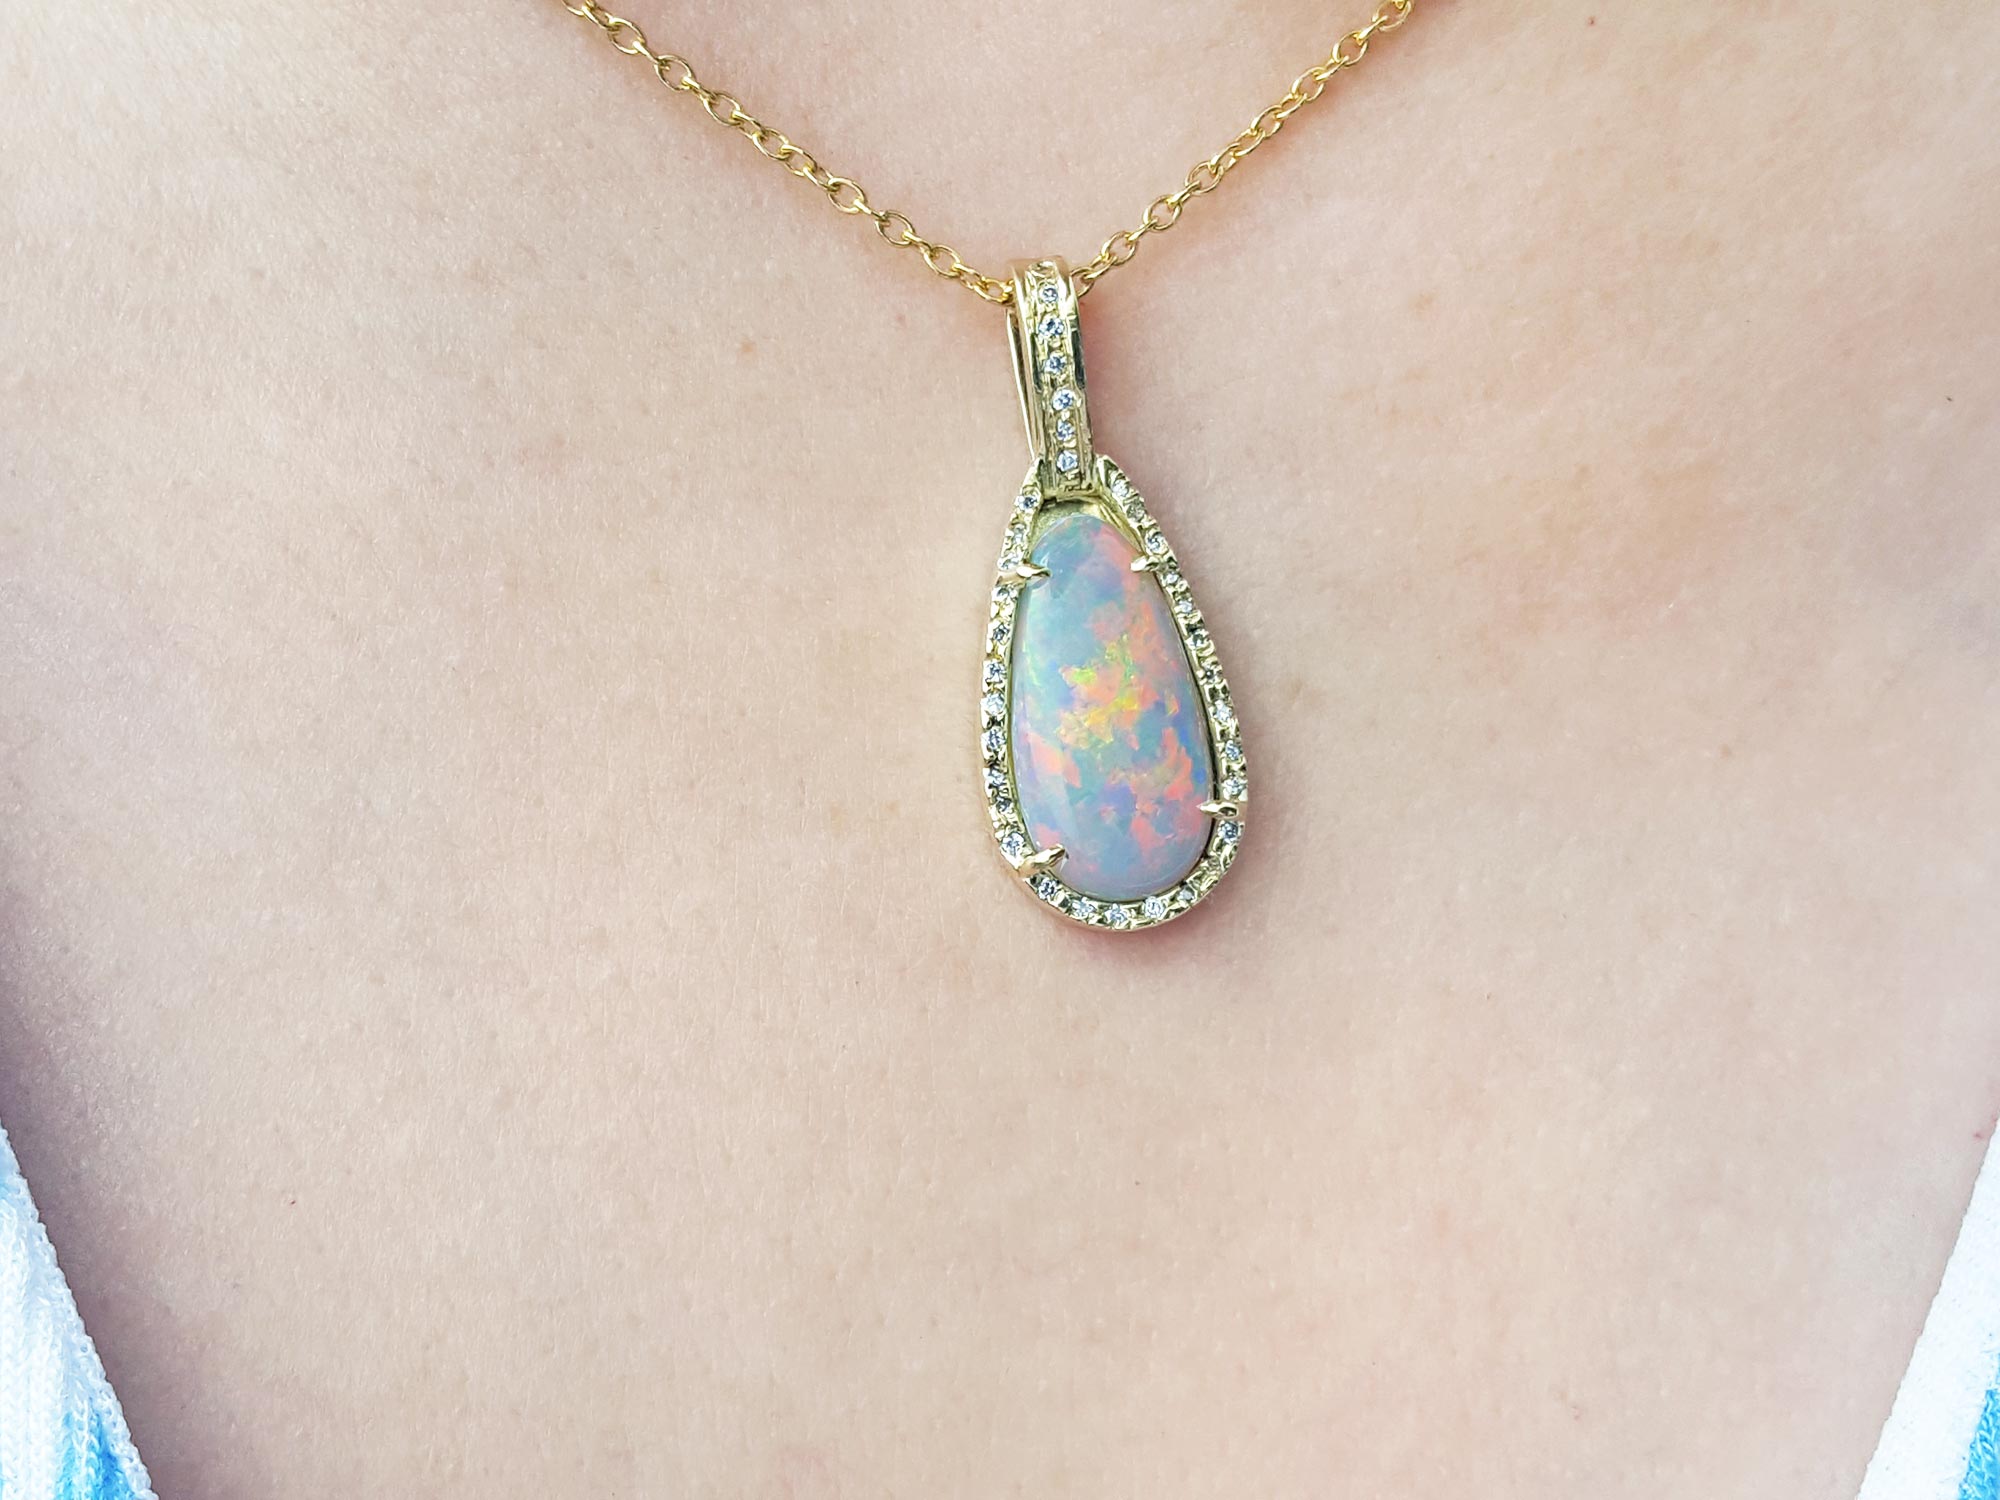 Solid Australian opal pendant necklace